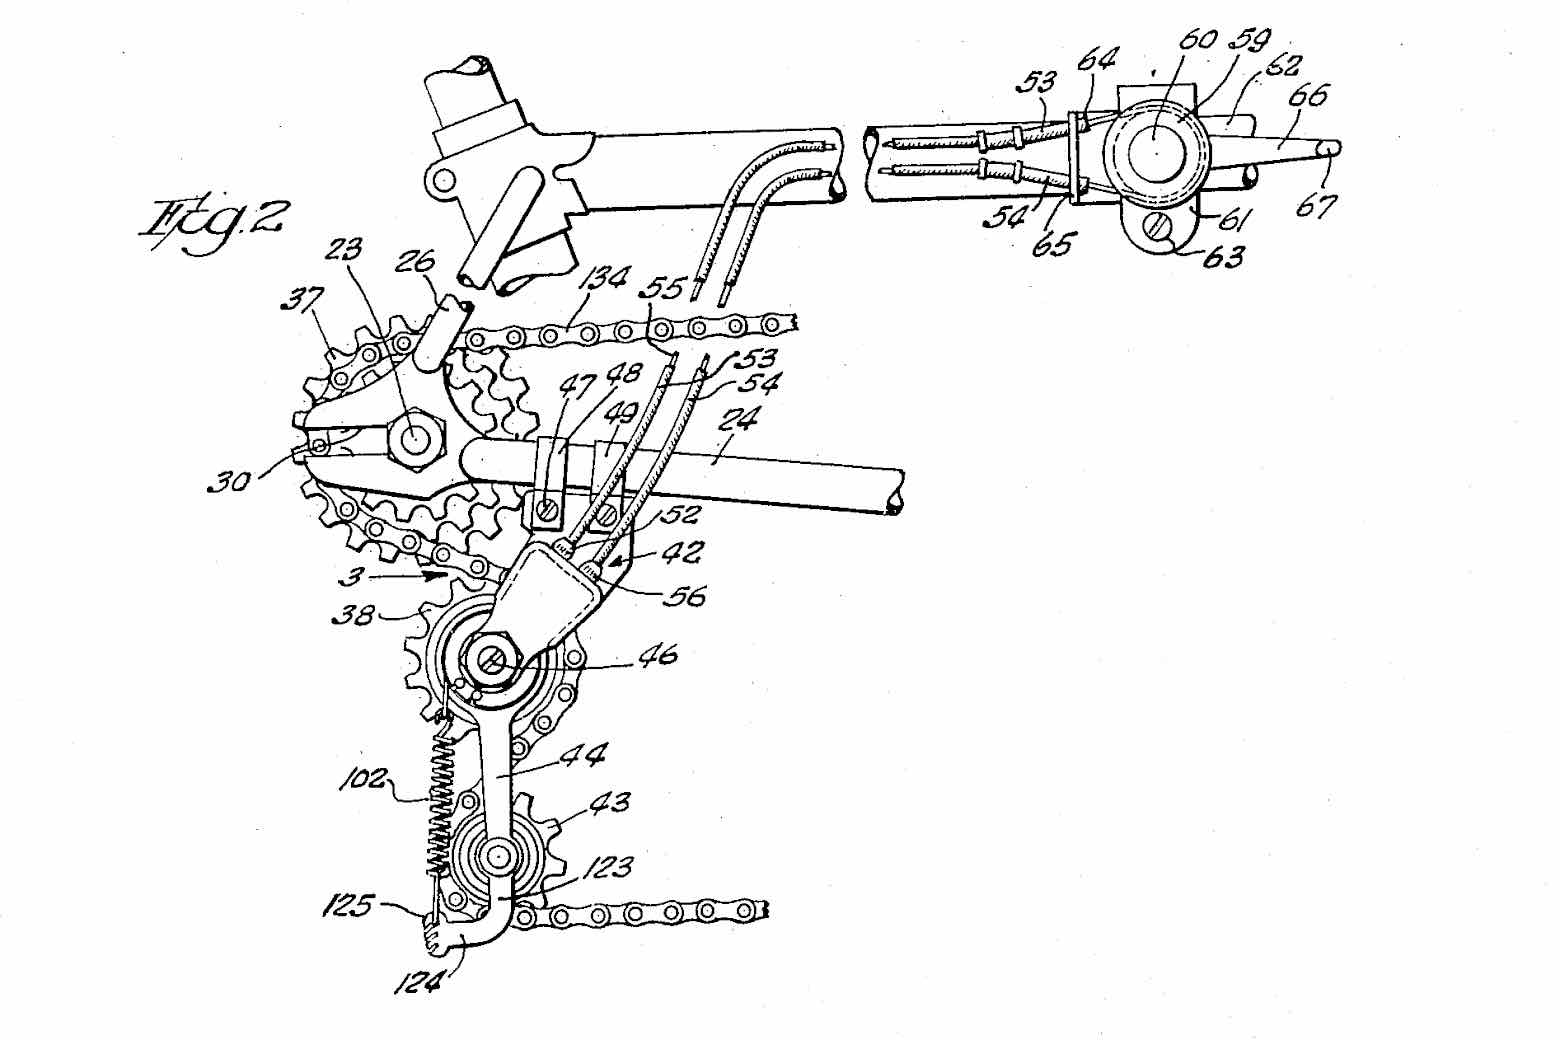 US Patent 2,431,513 - Schwinn main image